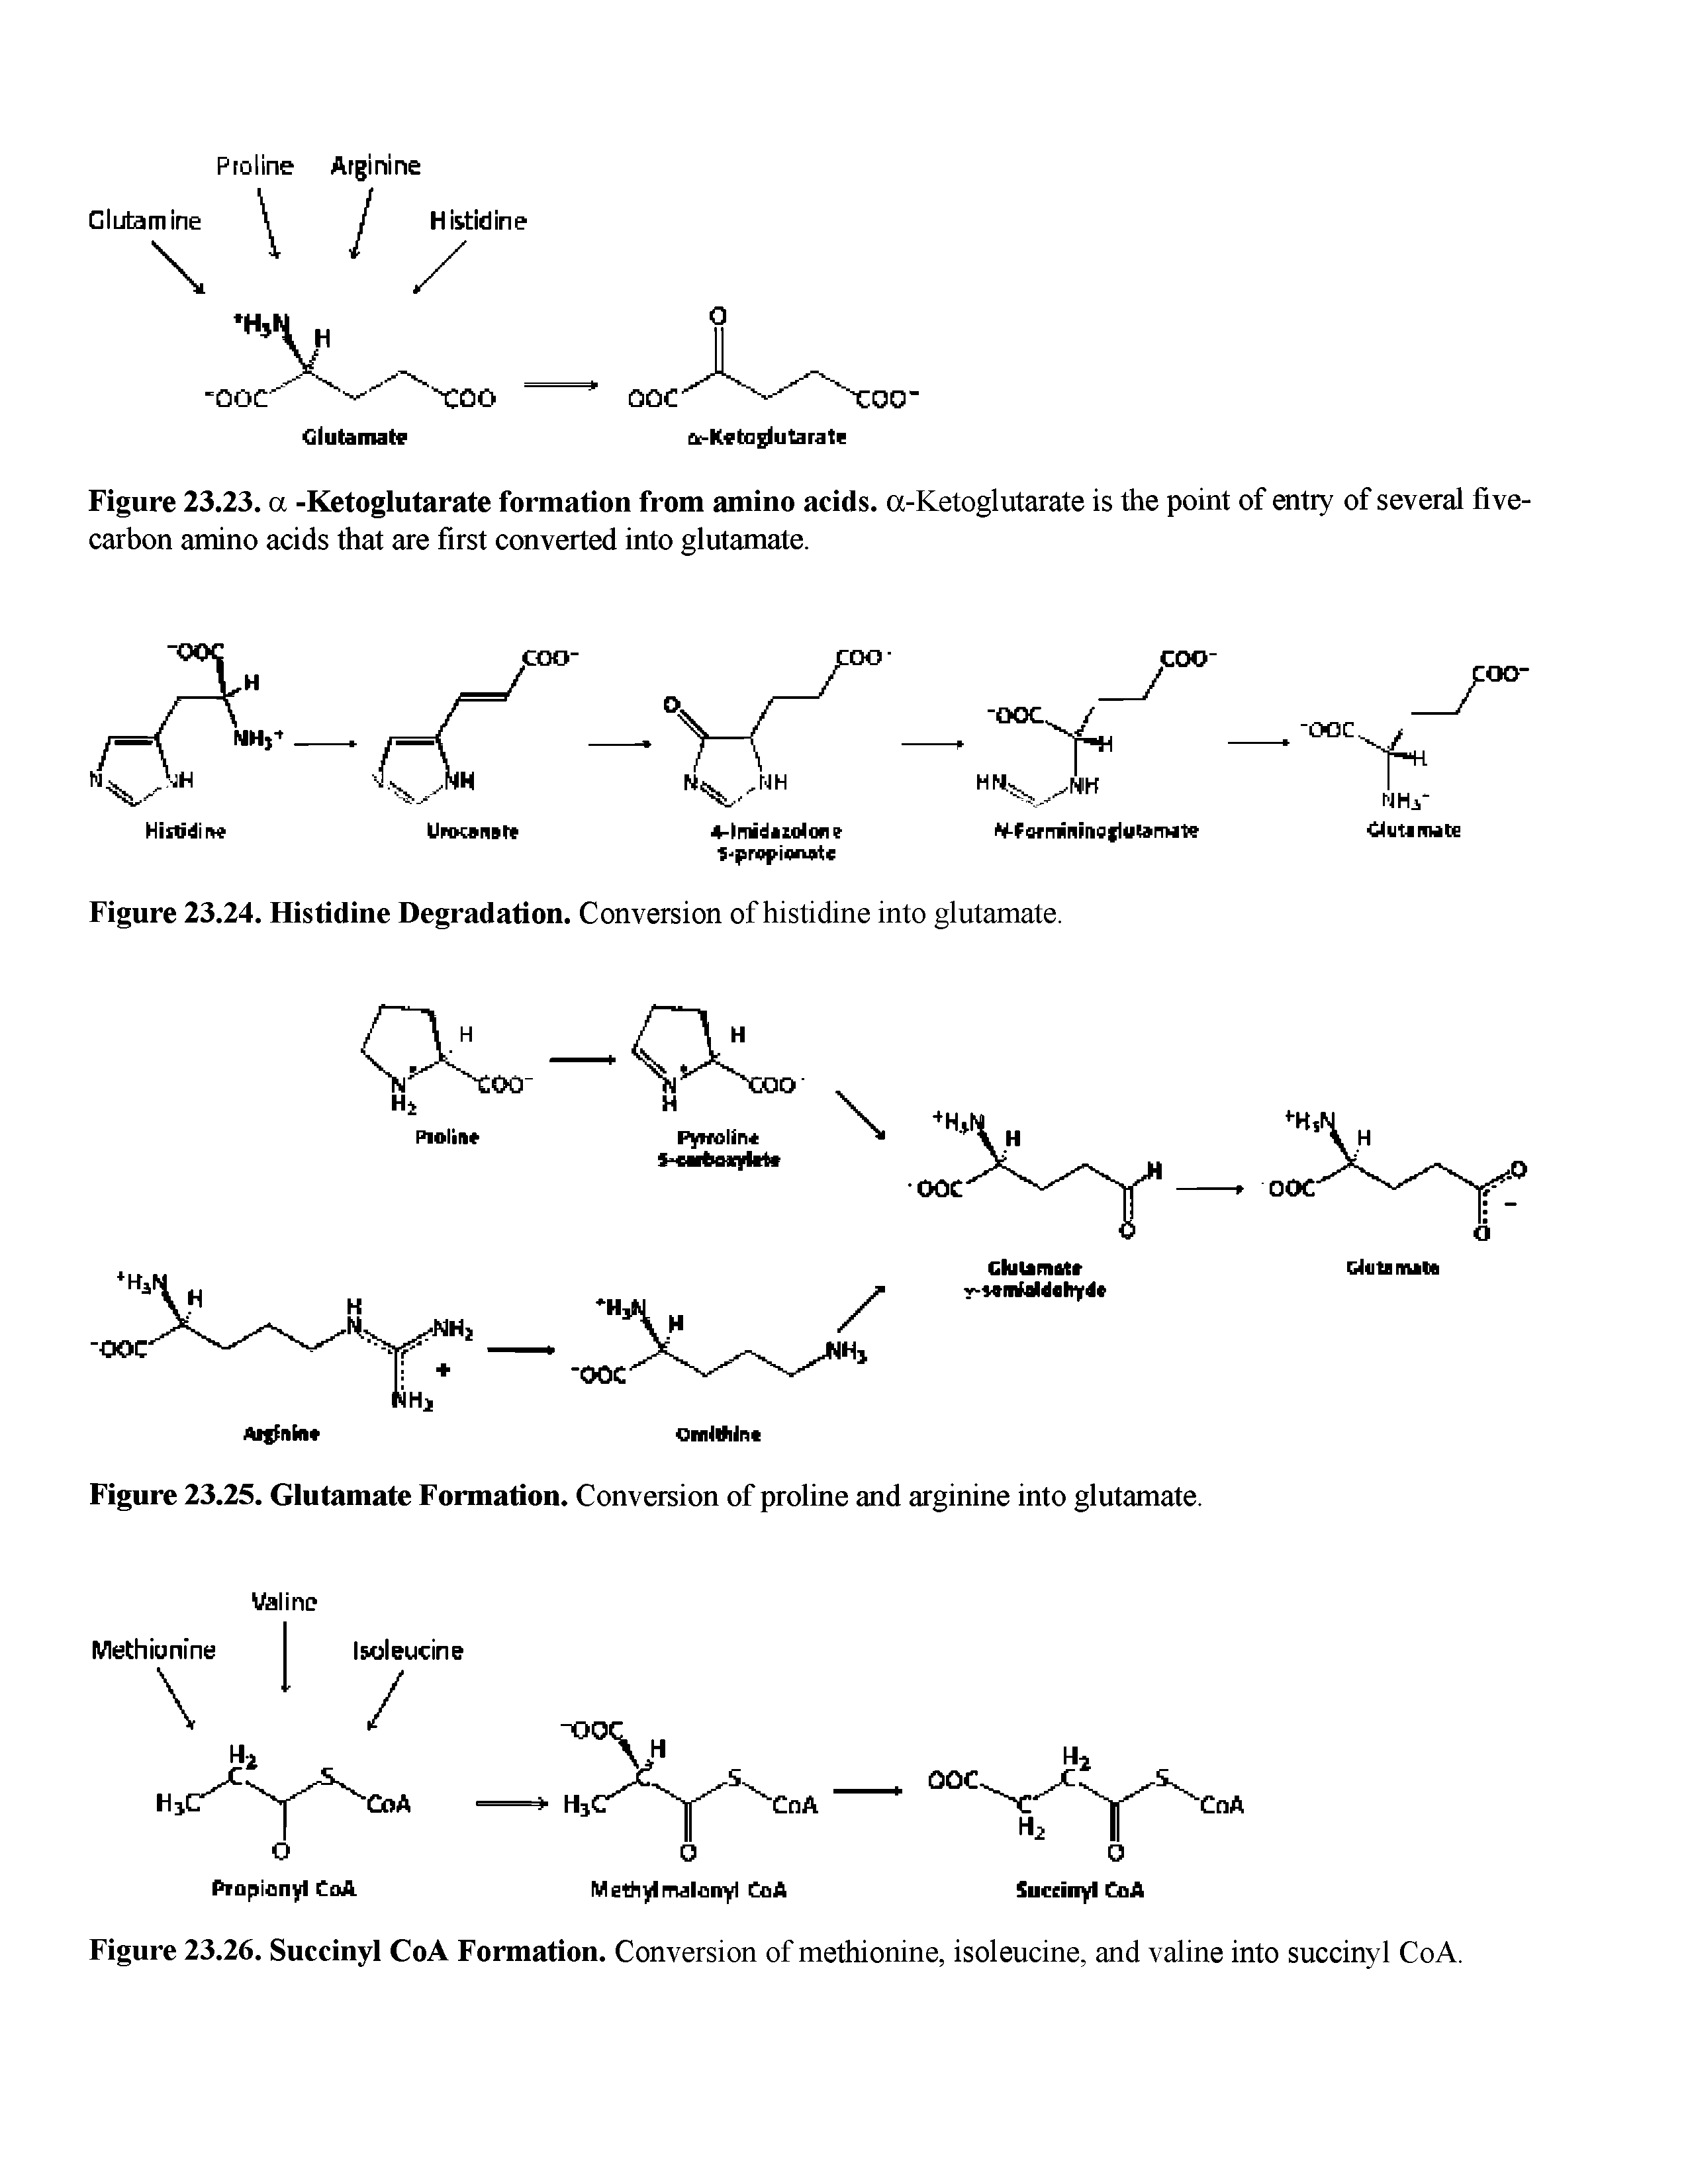 Figure 23.26. Suceinyl CoA Formation. Conversion of methionine, isoleucine, and valine into suceinyl CoA.